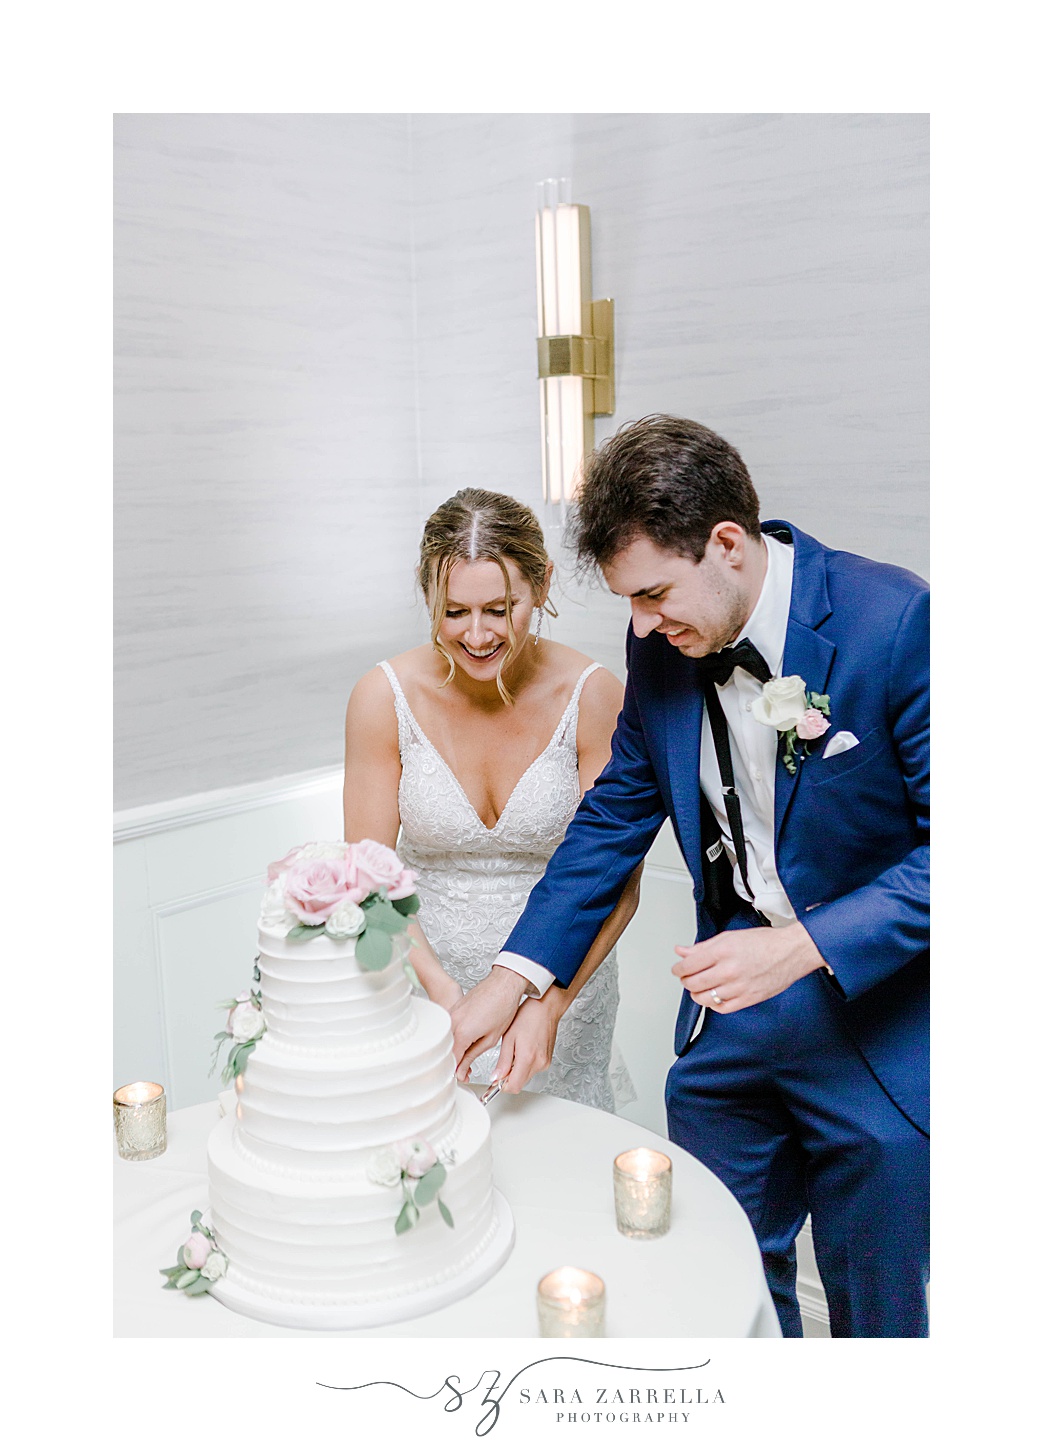 bride and groom cut wedding cake during Newport RI wedding reception